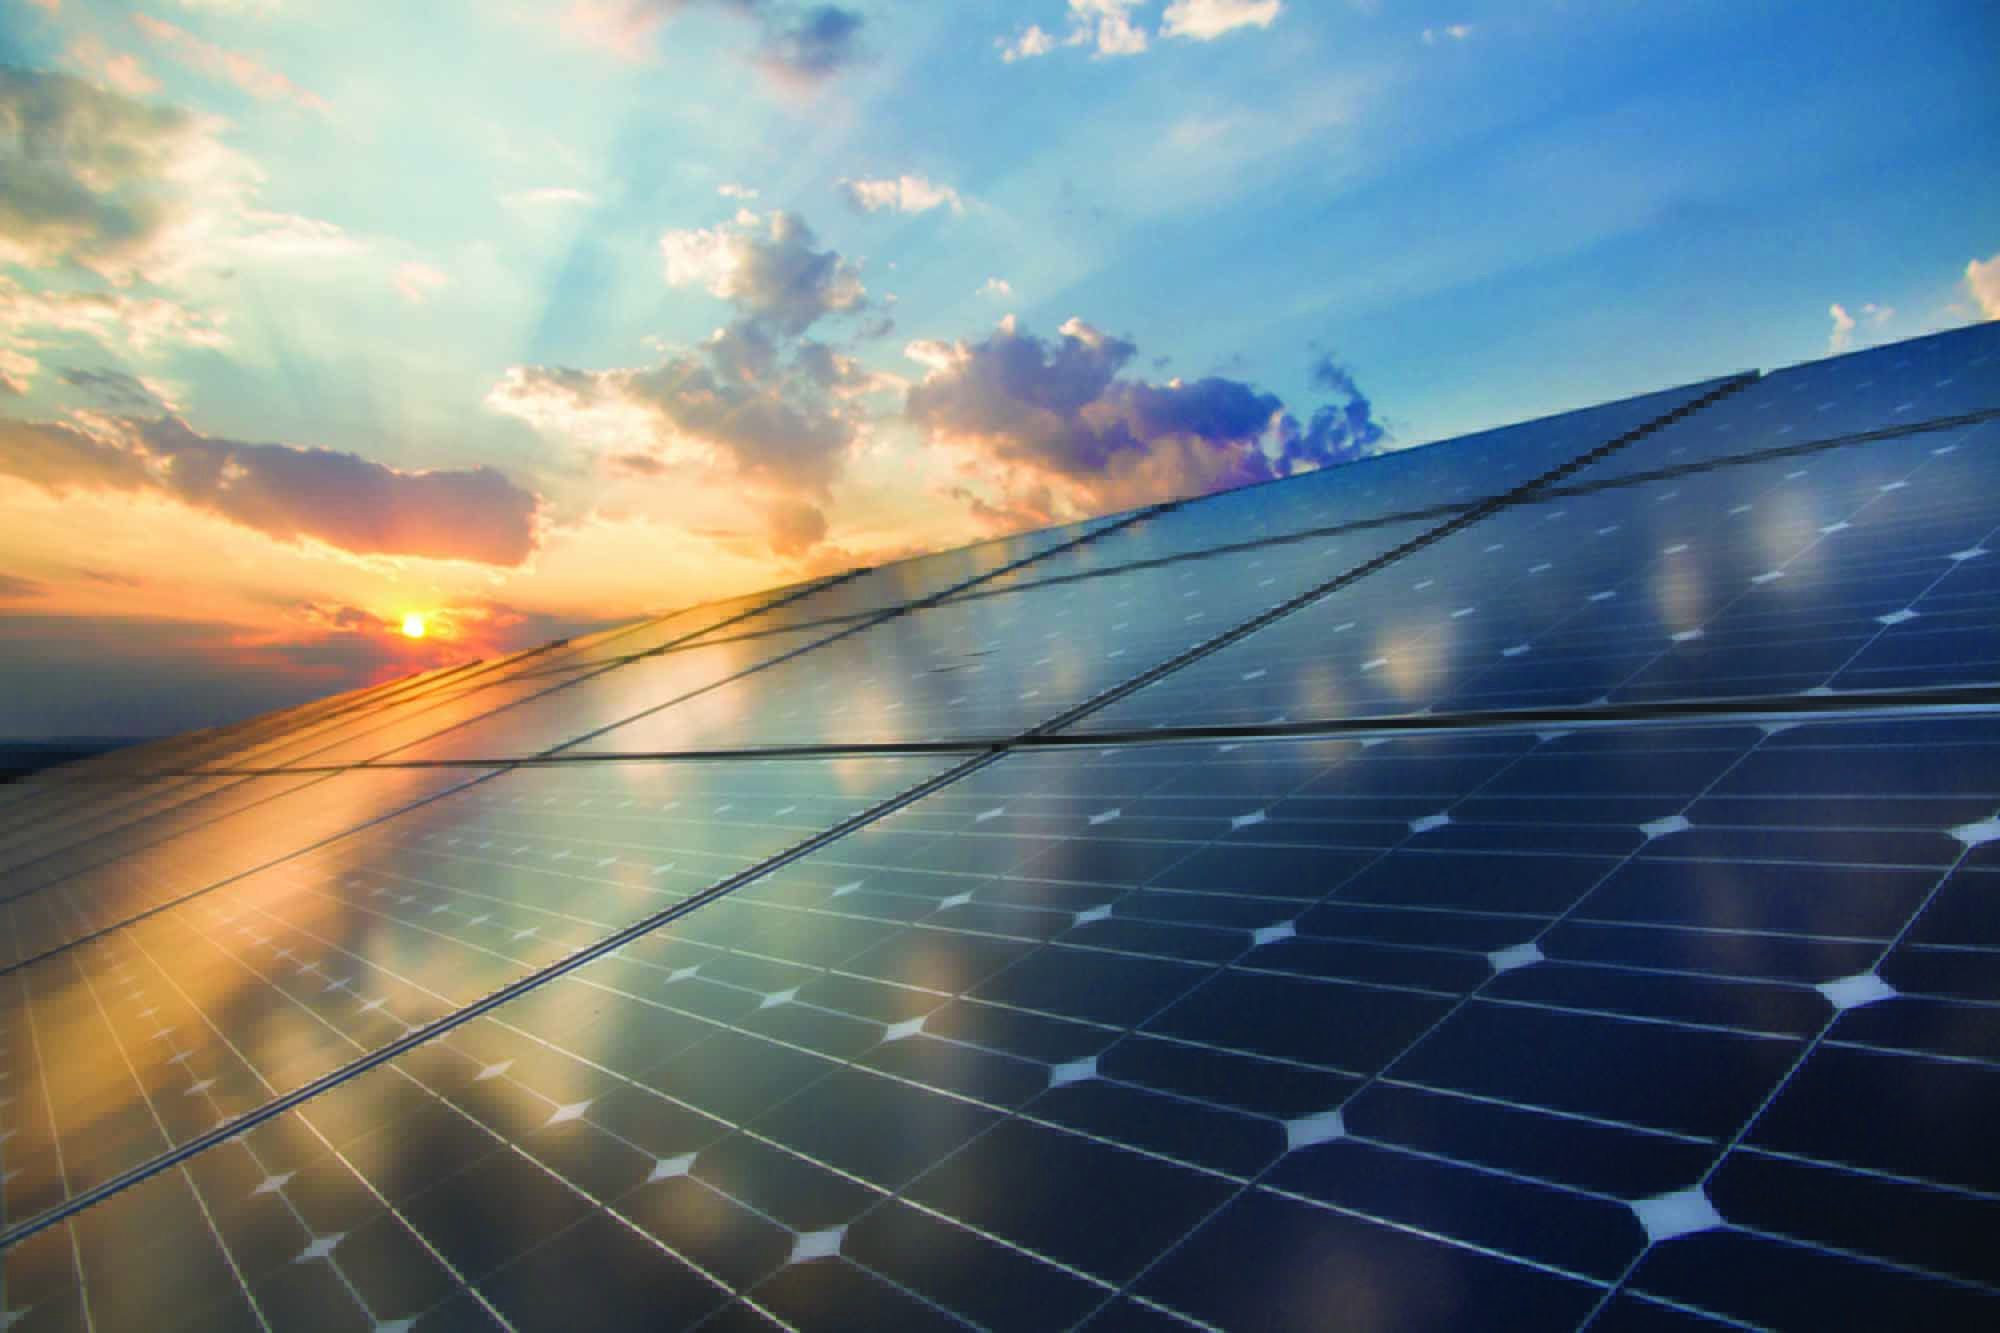 Waaree Energies provides 68 MW solar modules to Gensol Engineering